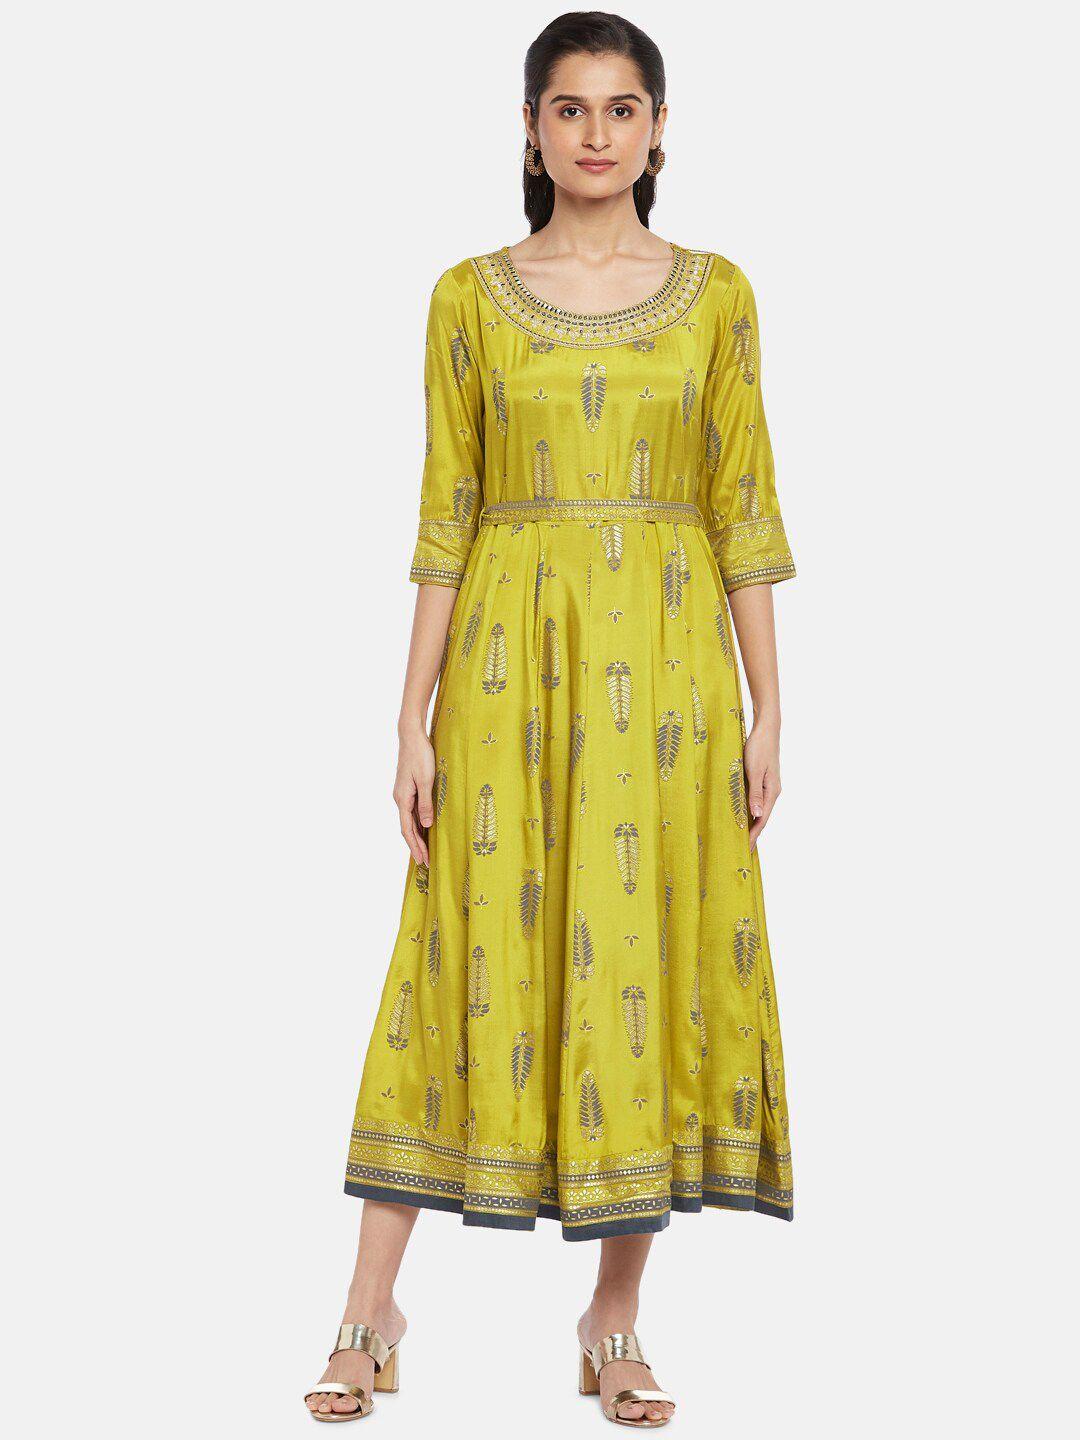 rangmanch by pantaloons women mustard yellow ethnic motifs a-line midi dress